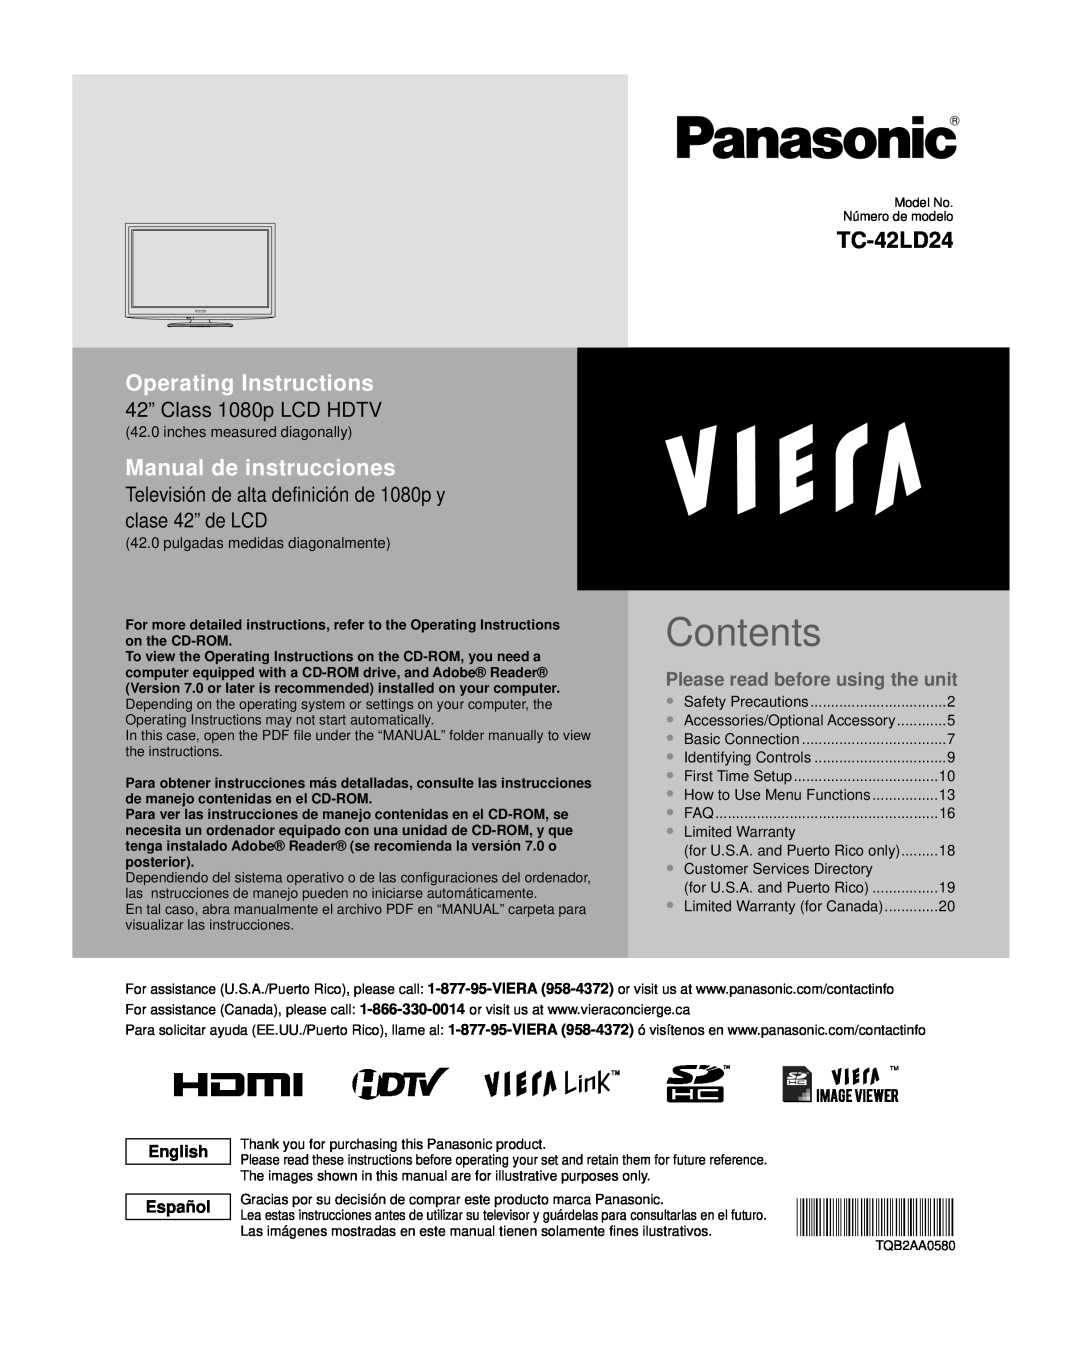 Panasonic TQB2AA0580 operating instructions Contents, TC-42LD24, Operating Instructions, Manual de instrucciones 